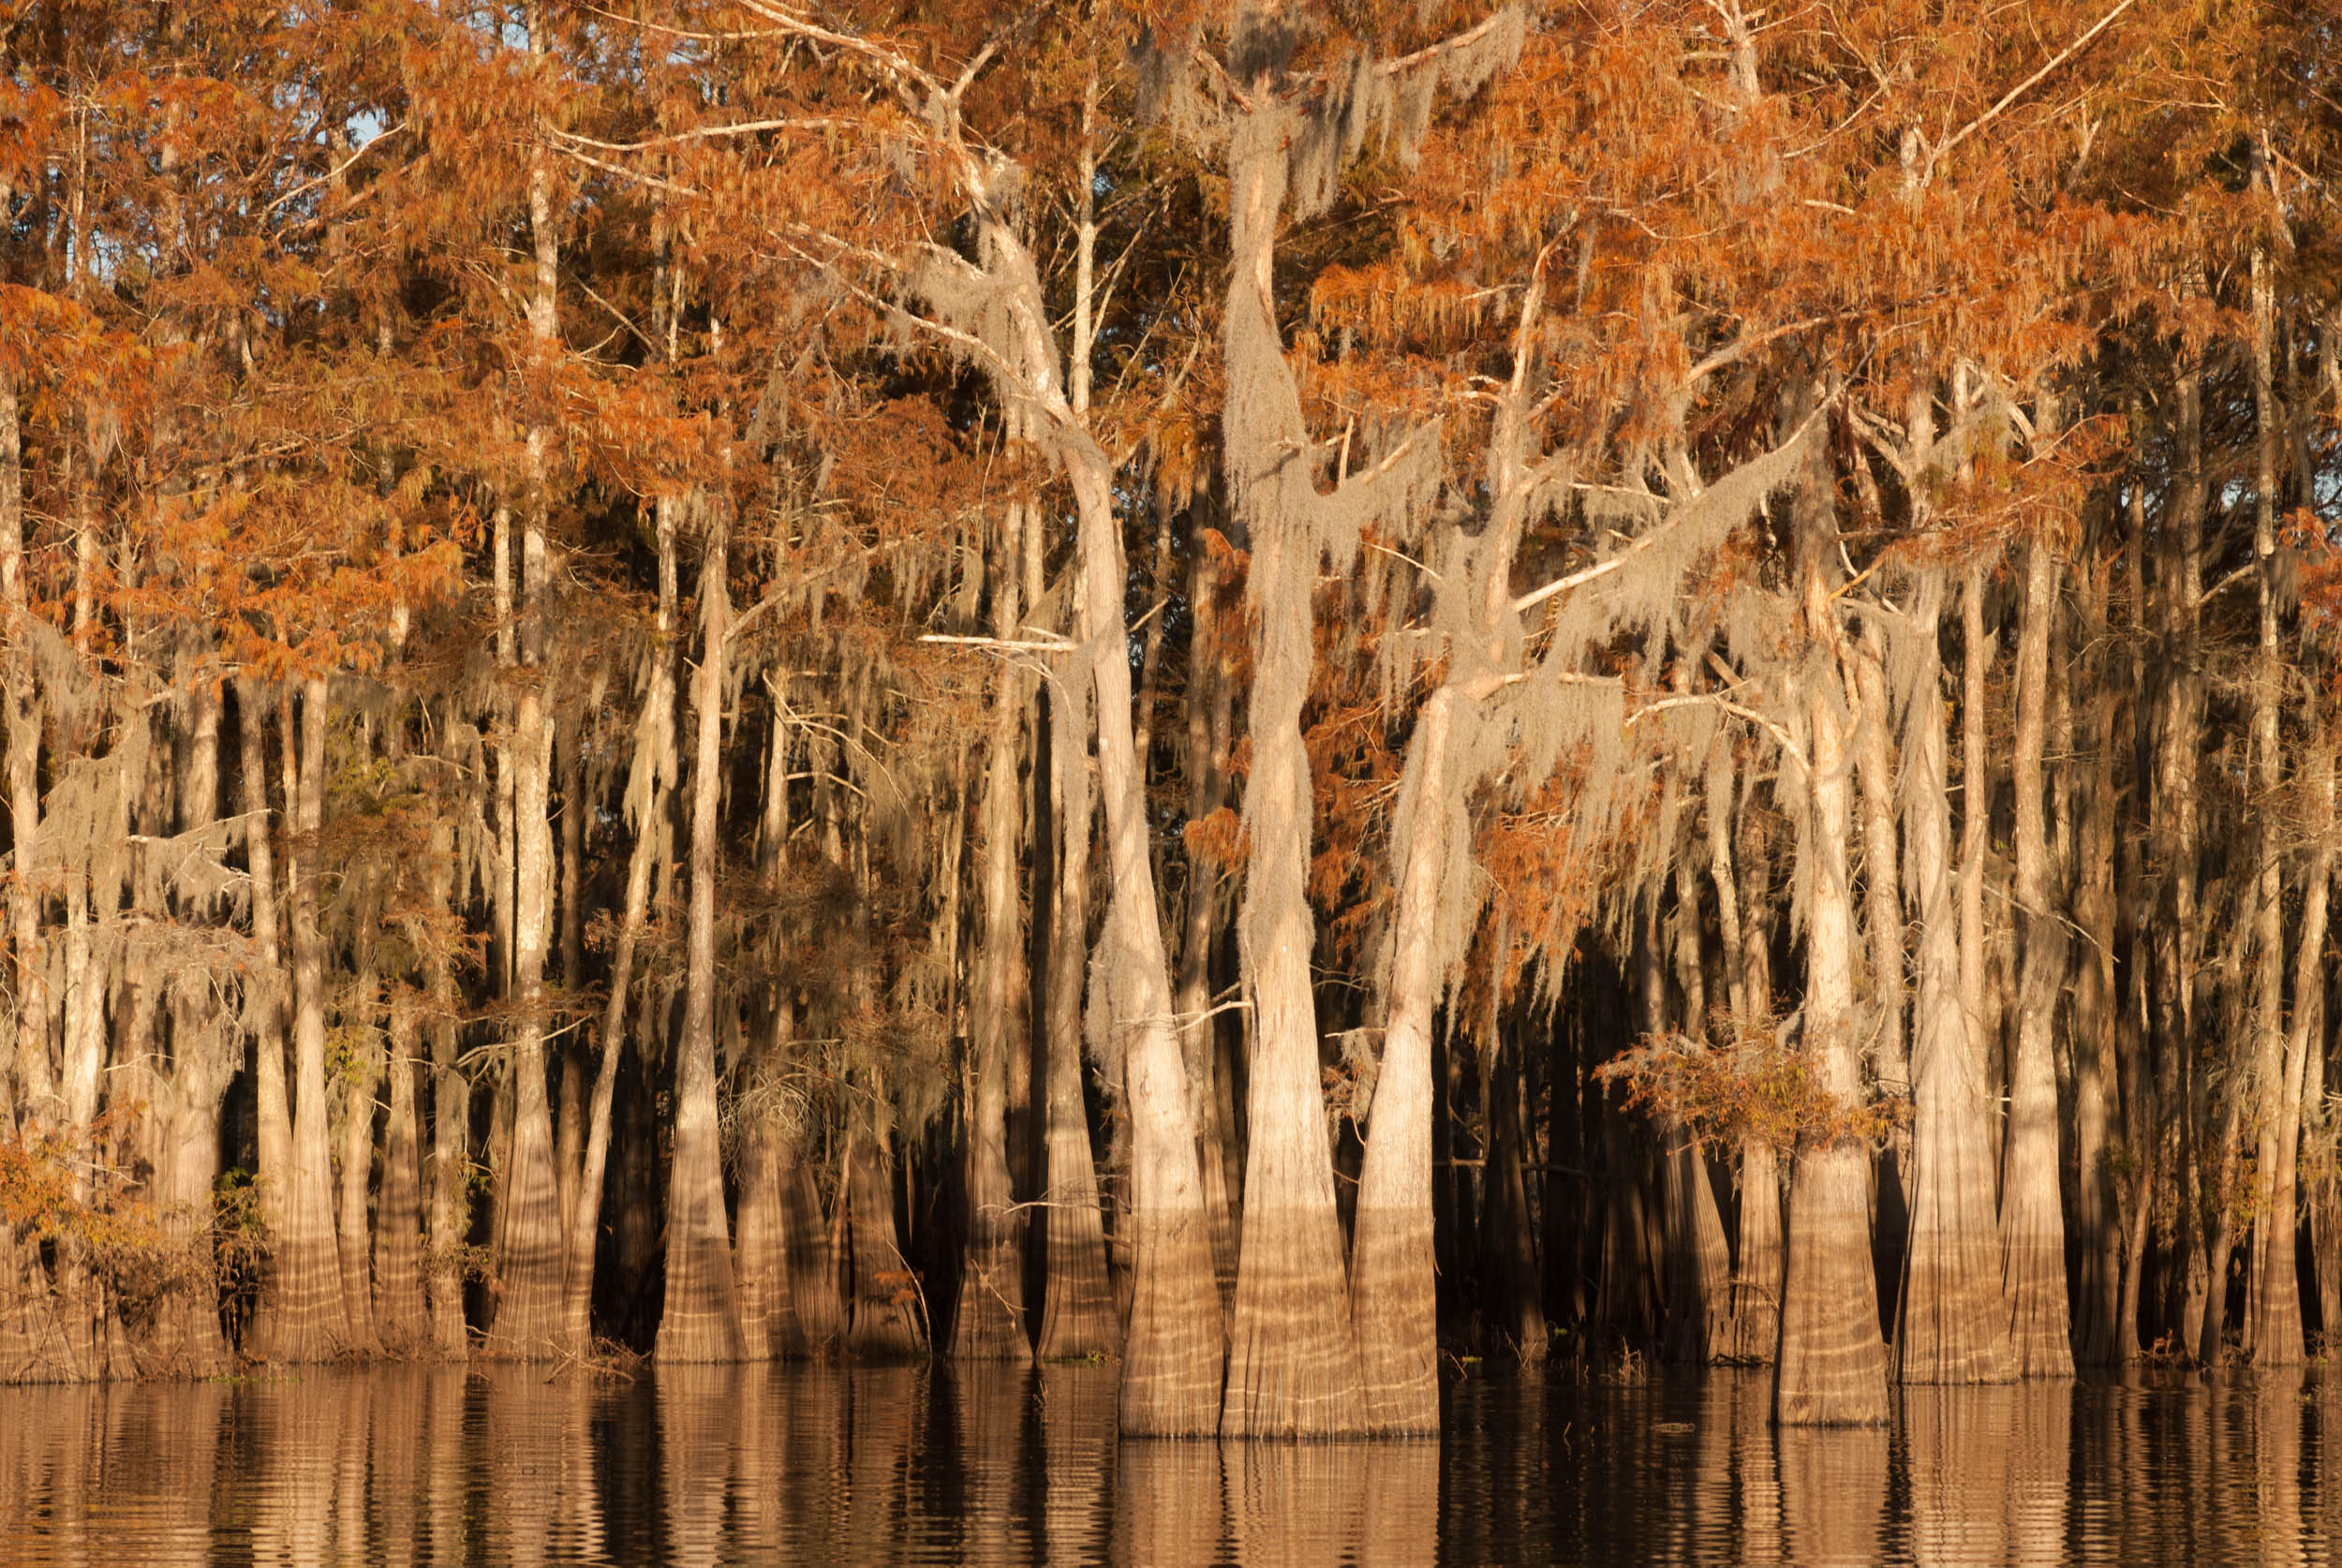  Cypress Trees – Herderson Lake, Butte La Rose, Atchafalaya Basin, Louisiana 